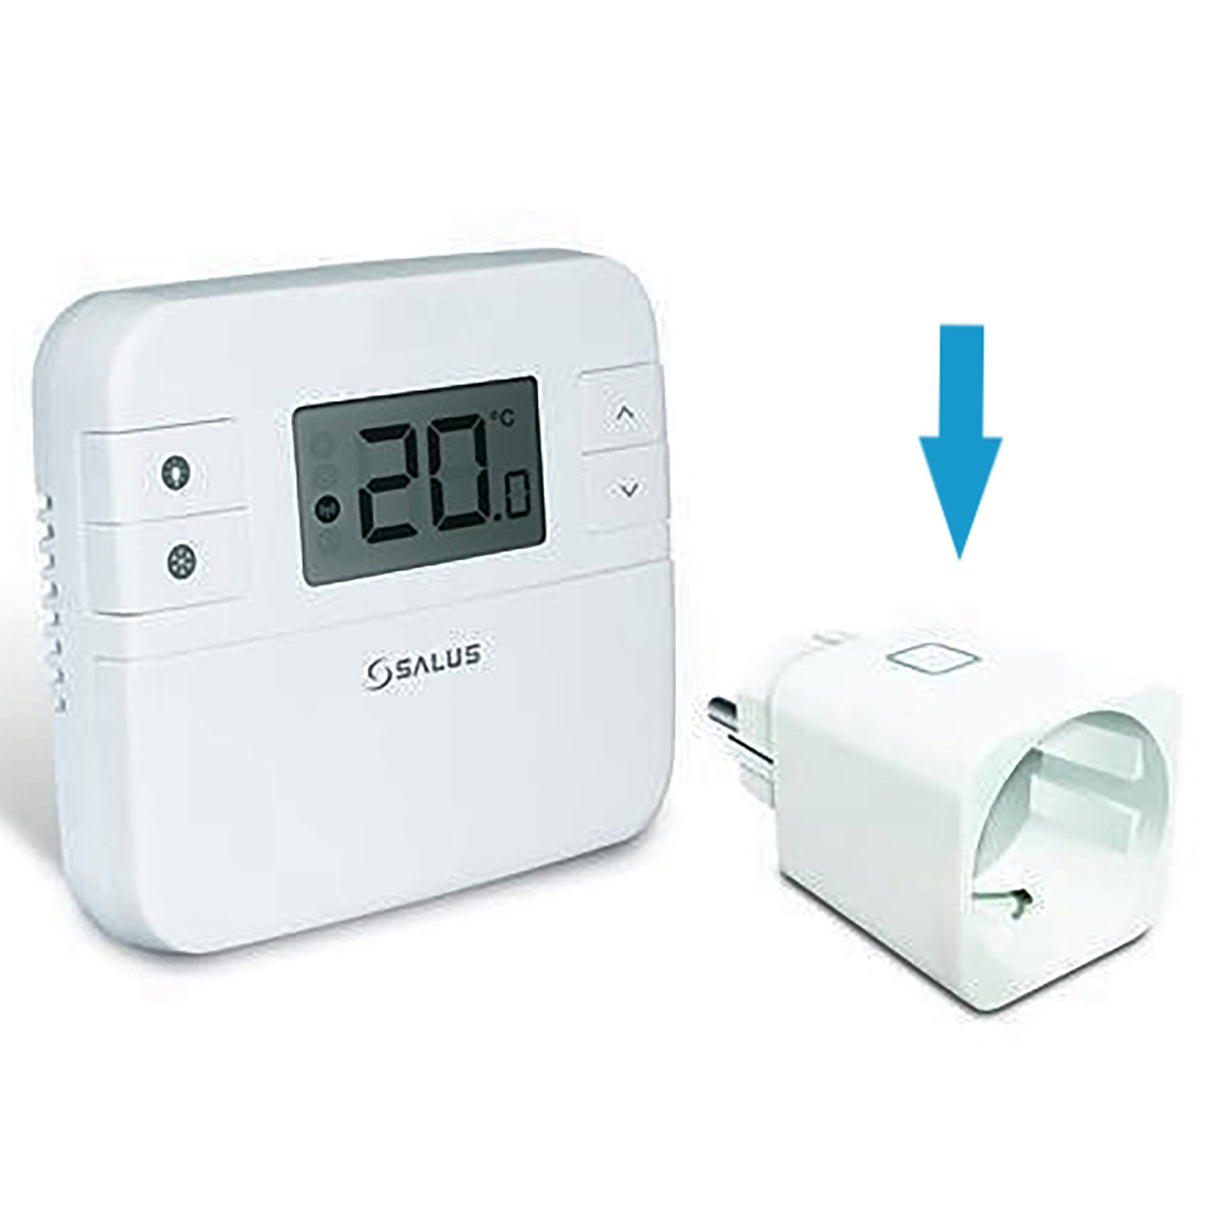 Prise thermostat chauffage infrarouge Lely robot de traite